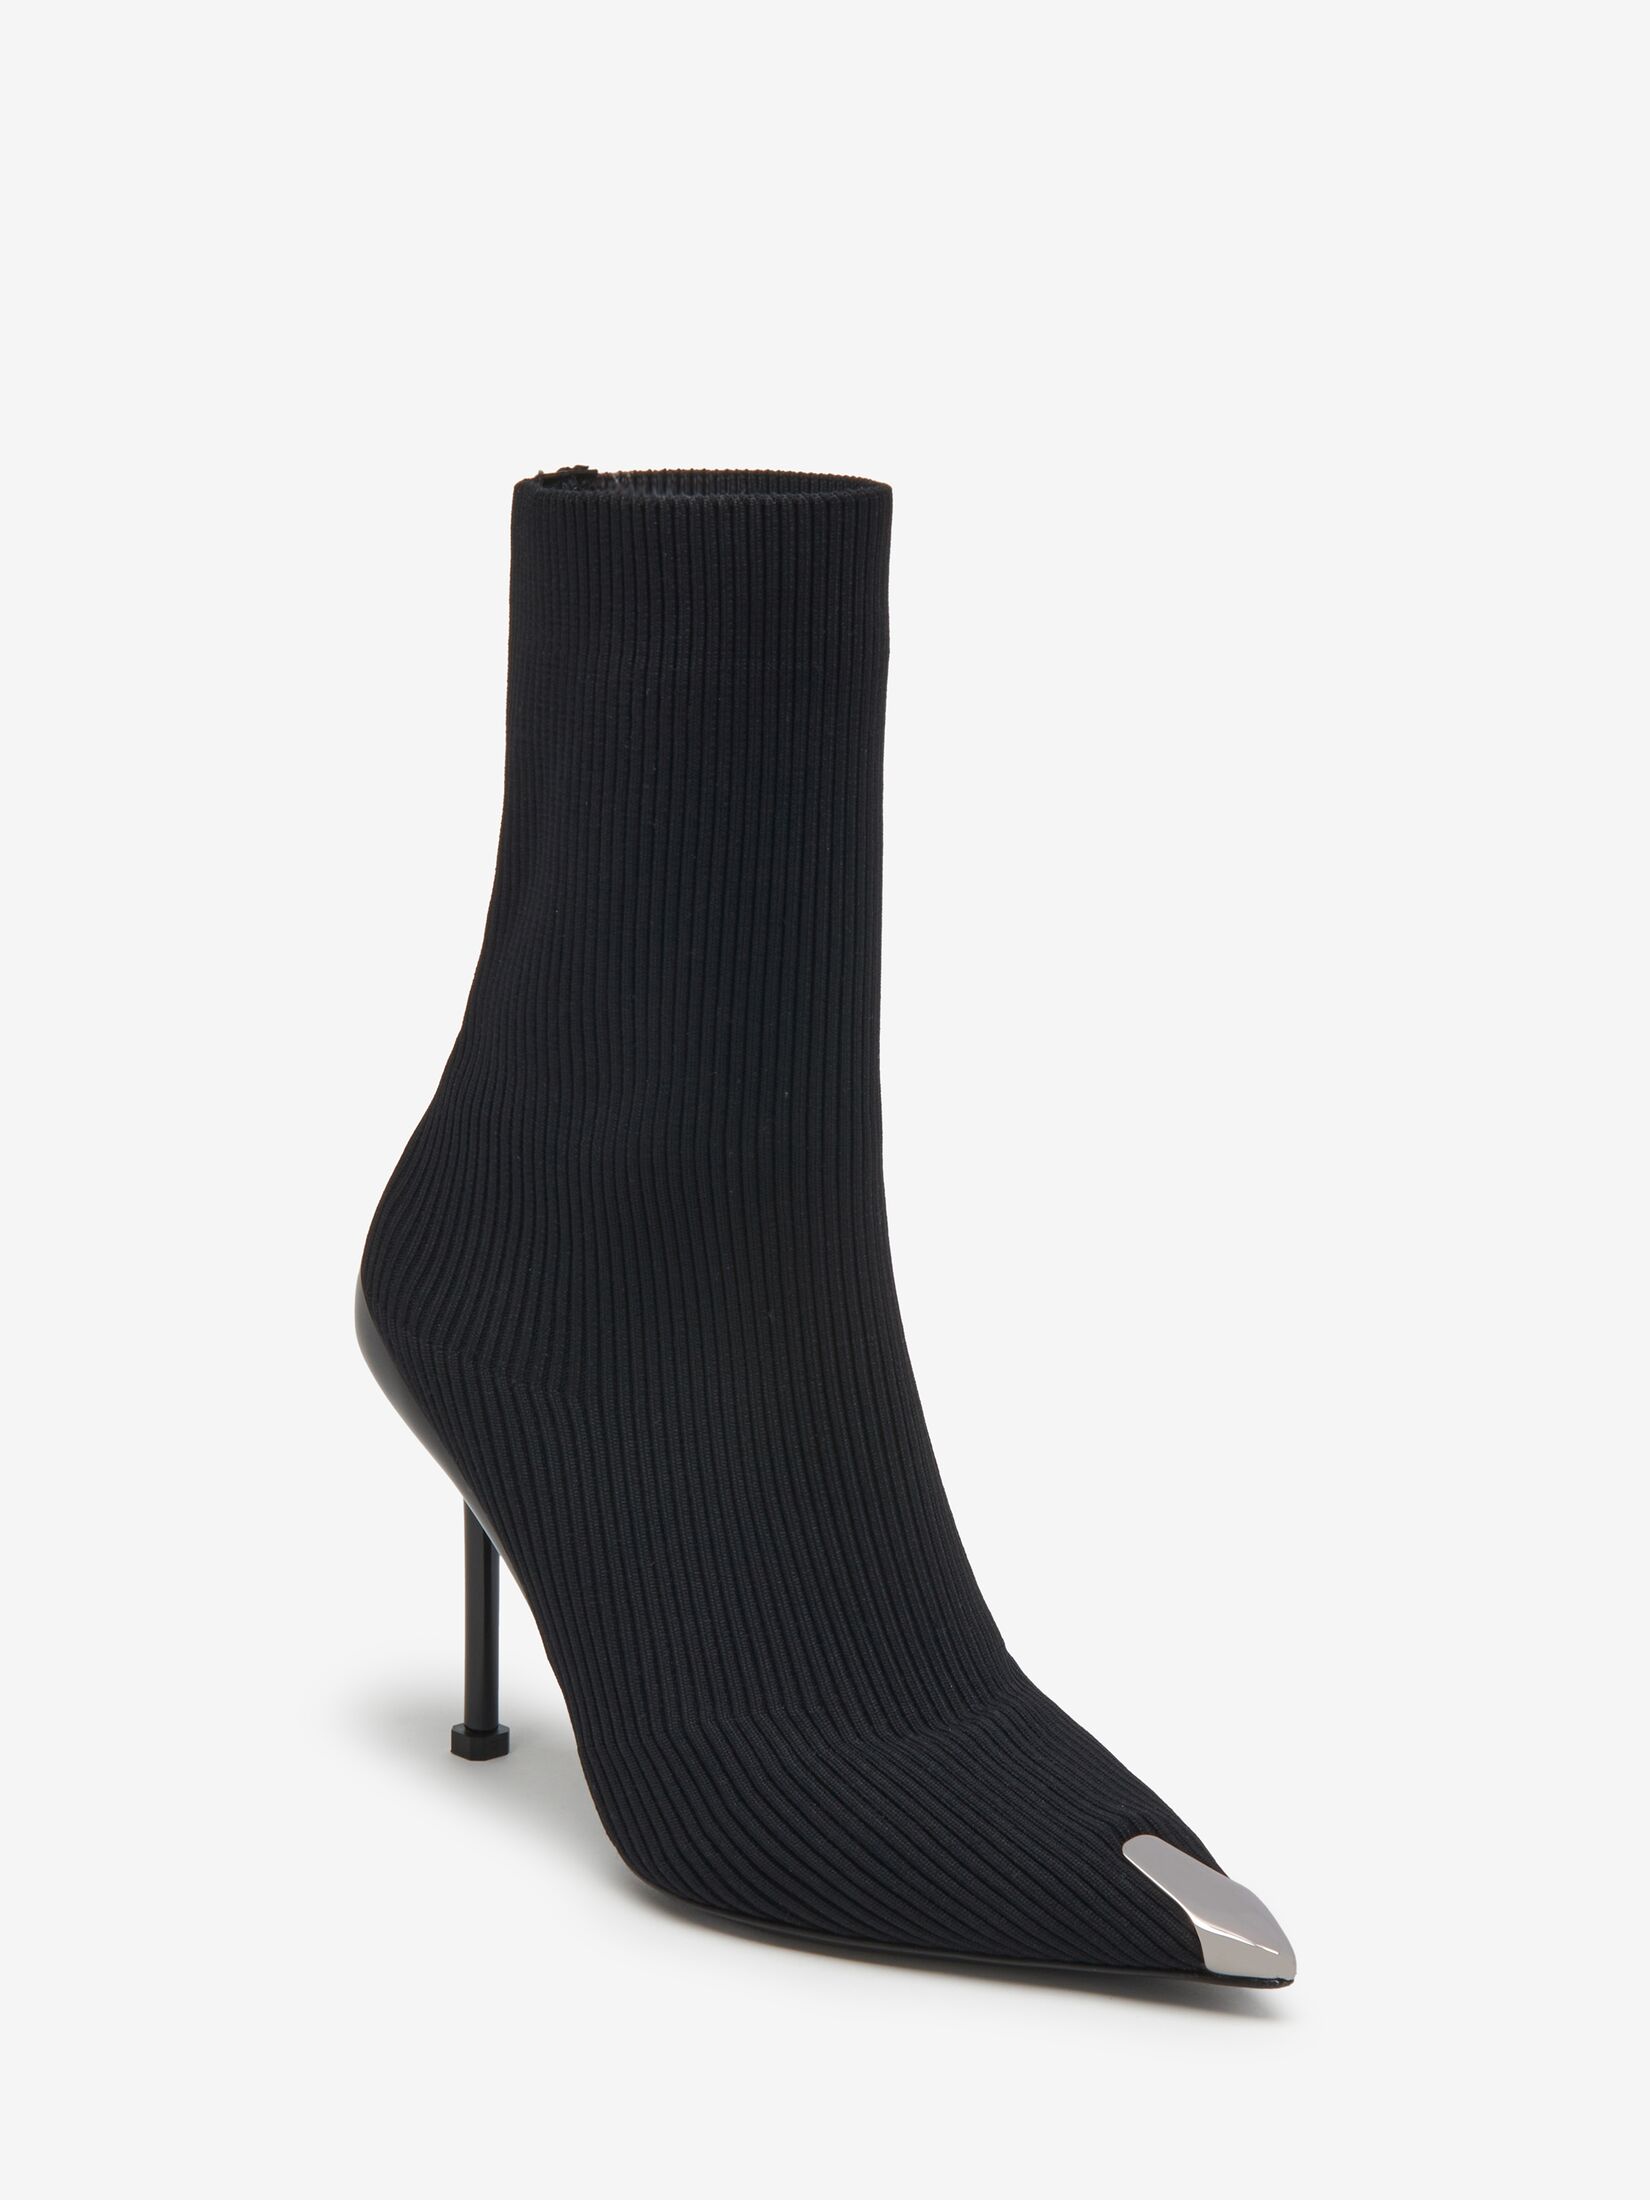 Slash Knit Boot in Black/Silver | Alexander McQueen US